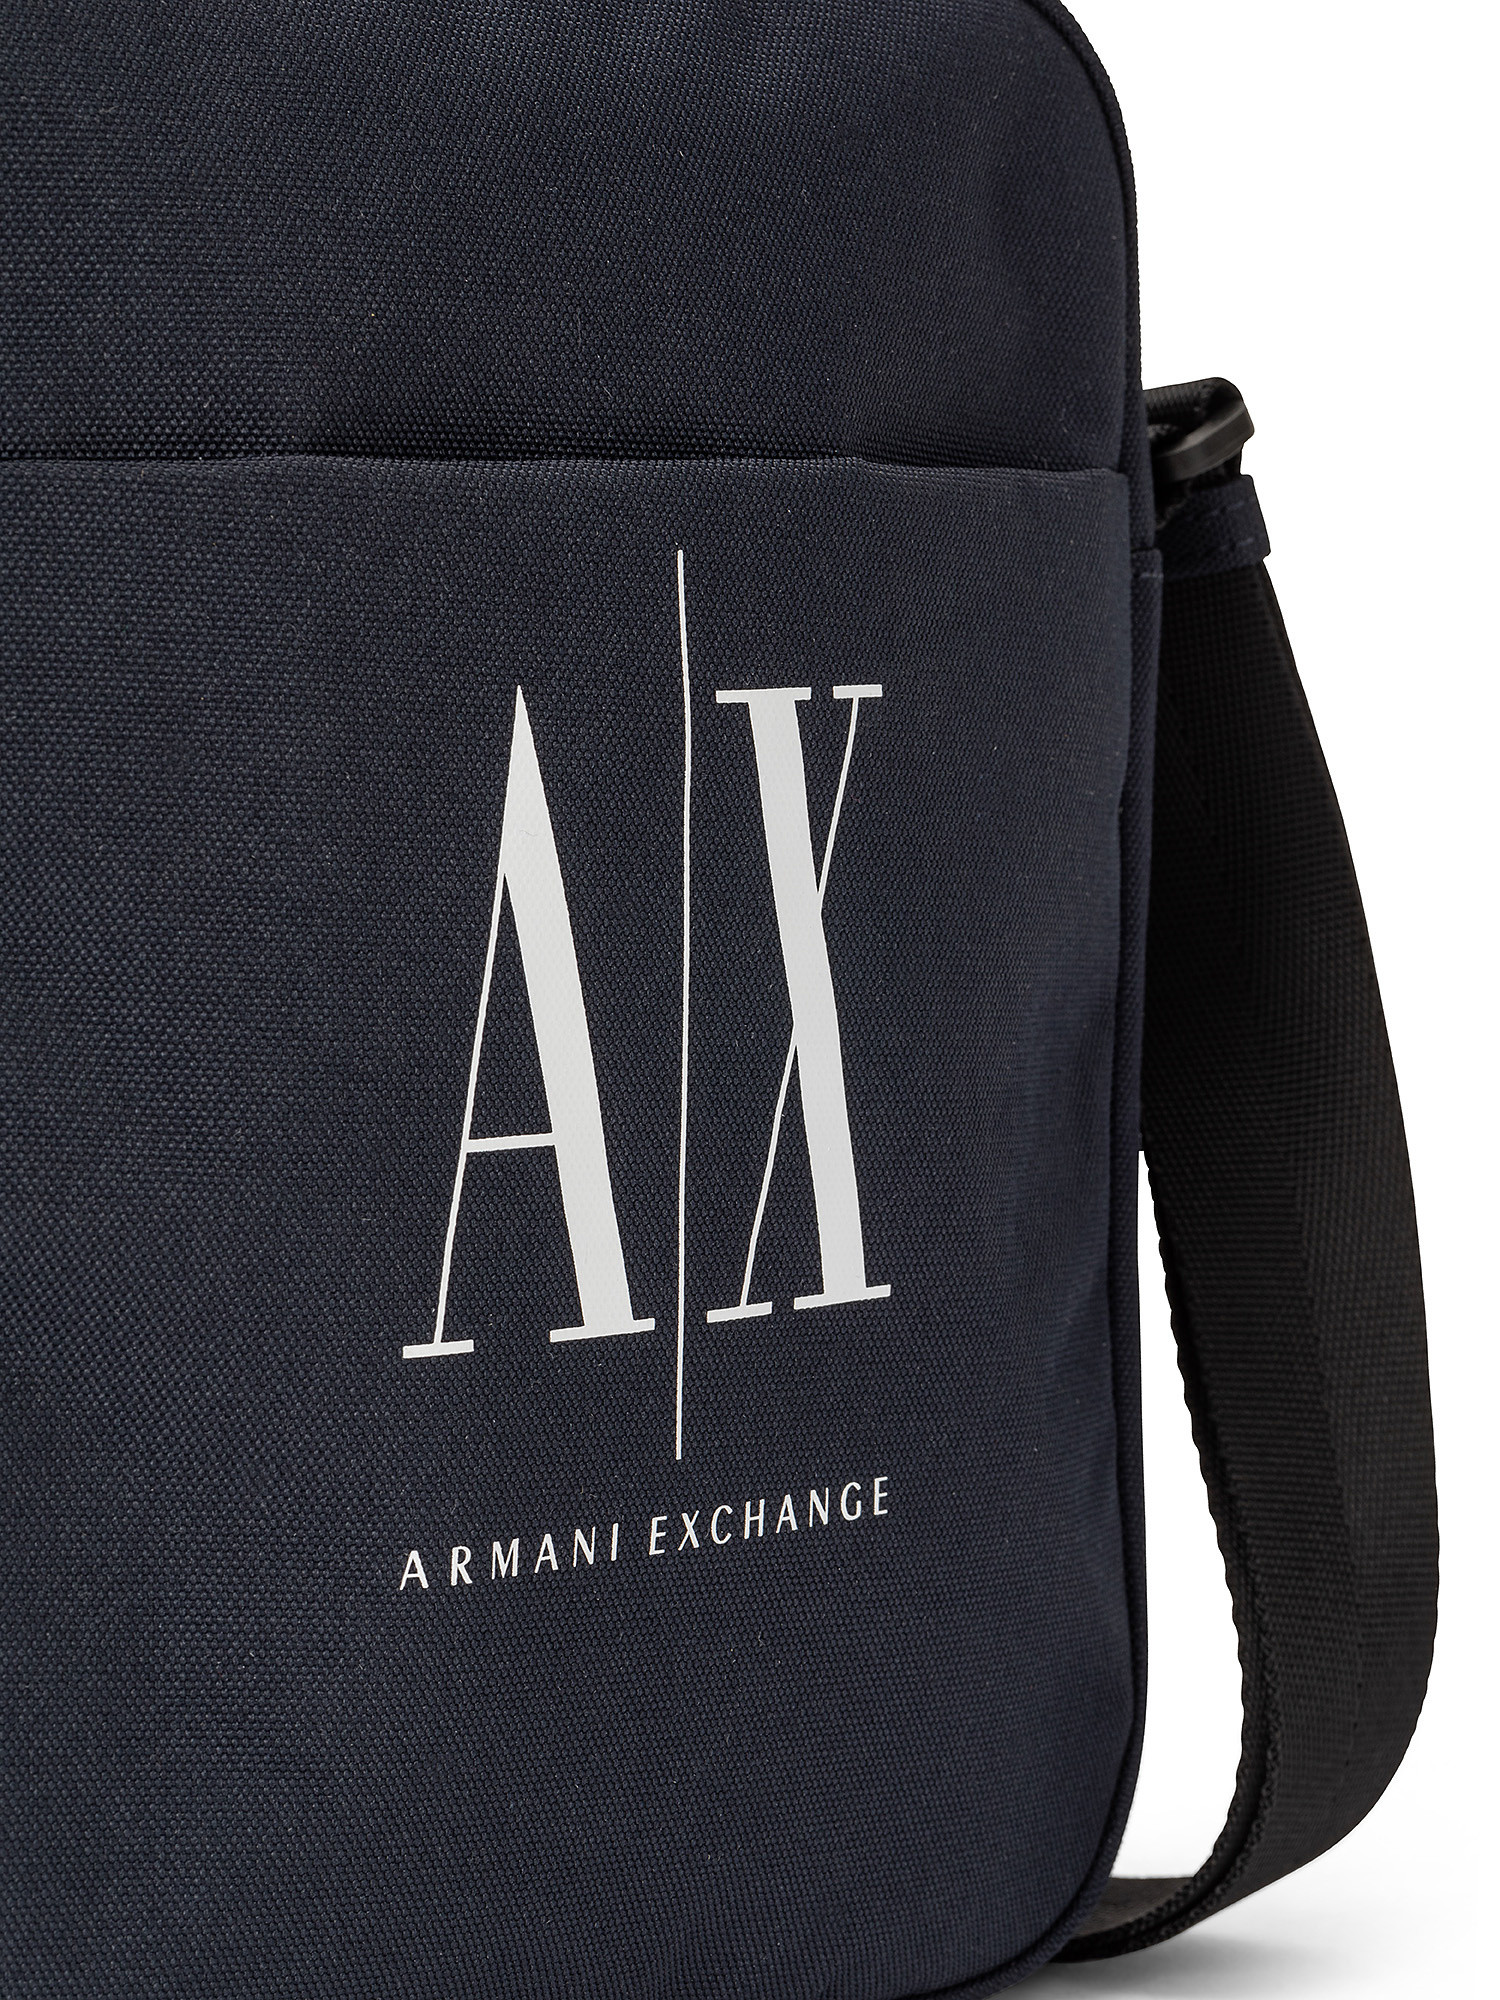 Armani Exchange - Tracolla in nylon con logo a contrasto, Blu scuro, large image number 2